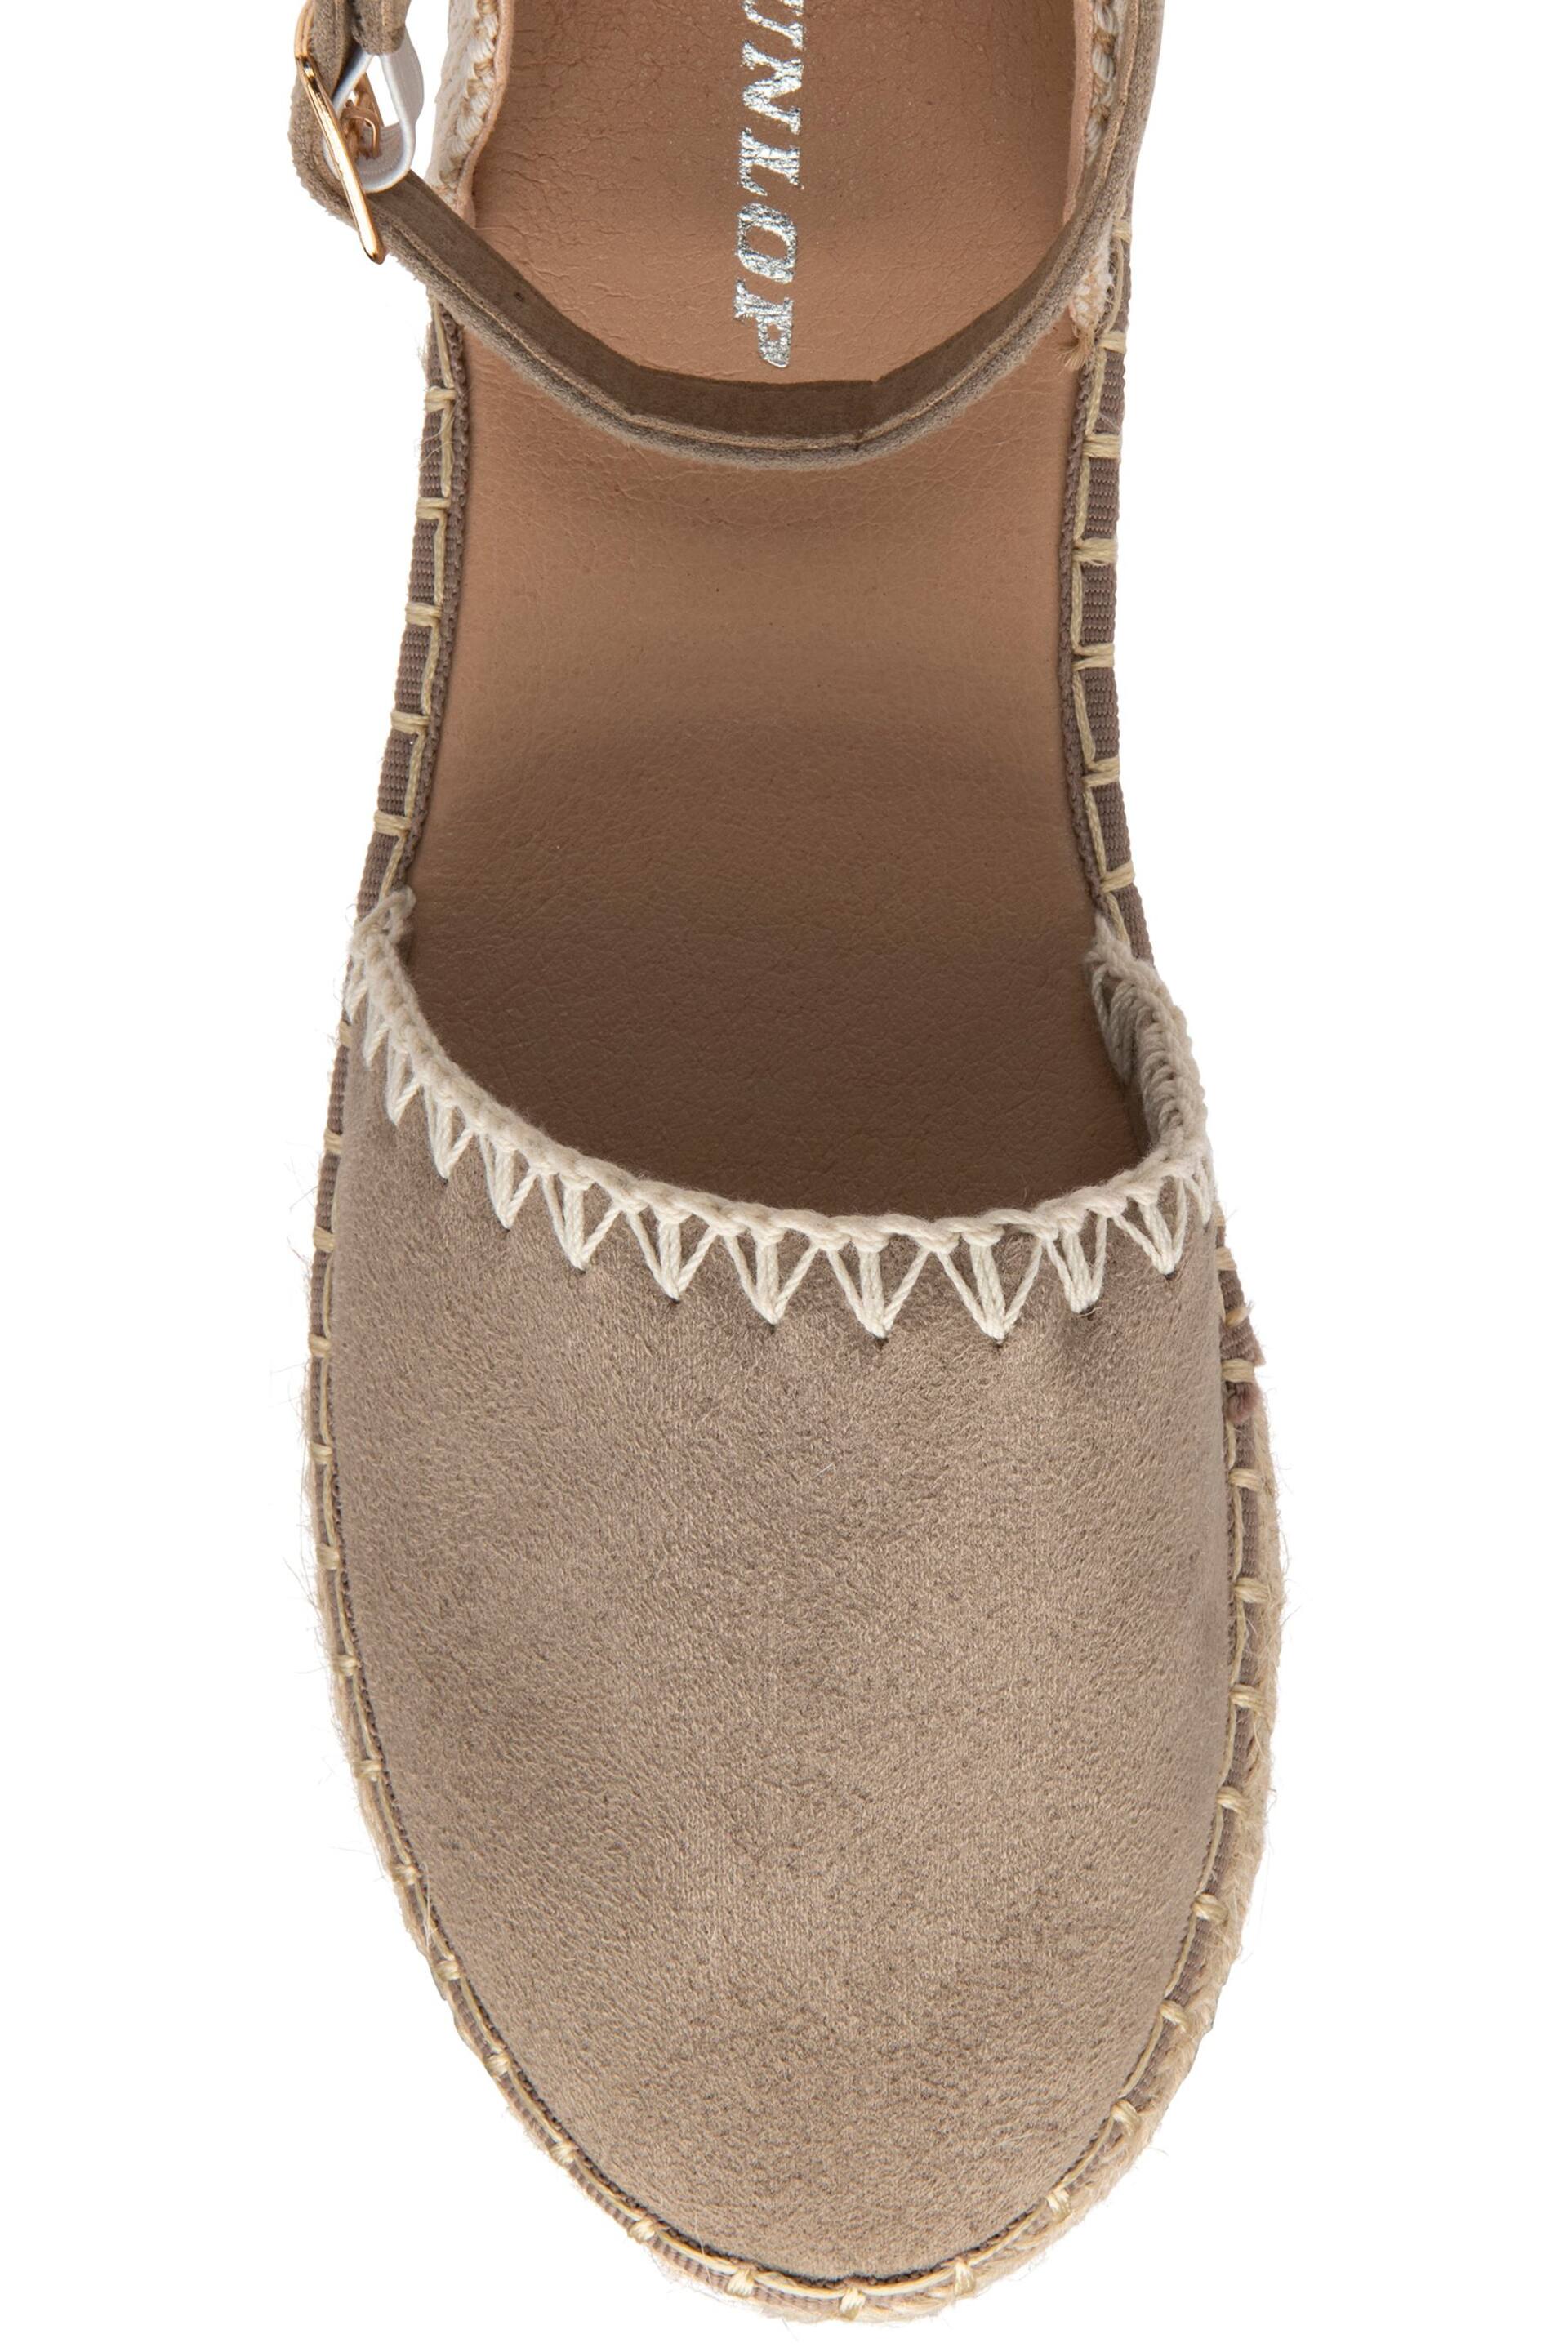 Dunlop light Brown Flat Espadrille Sandals - Image 4 of 4